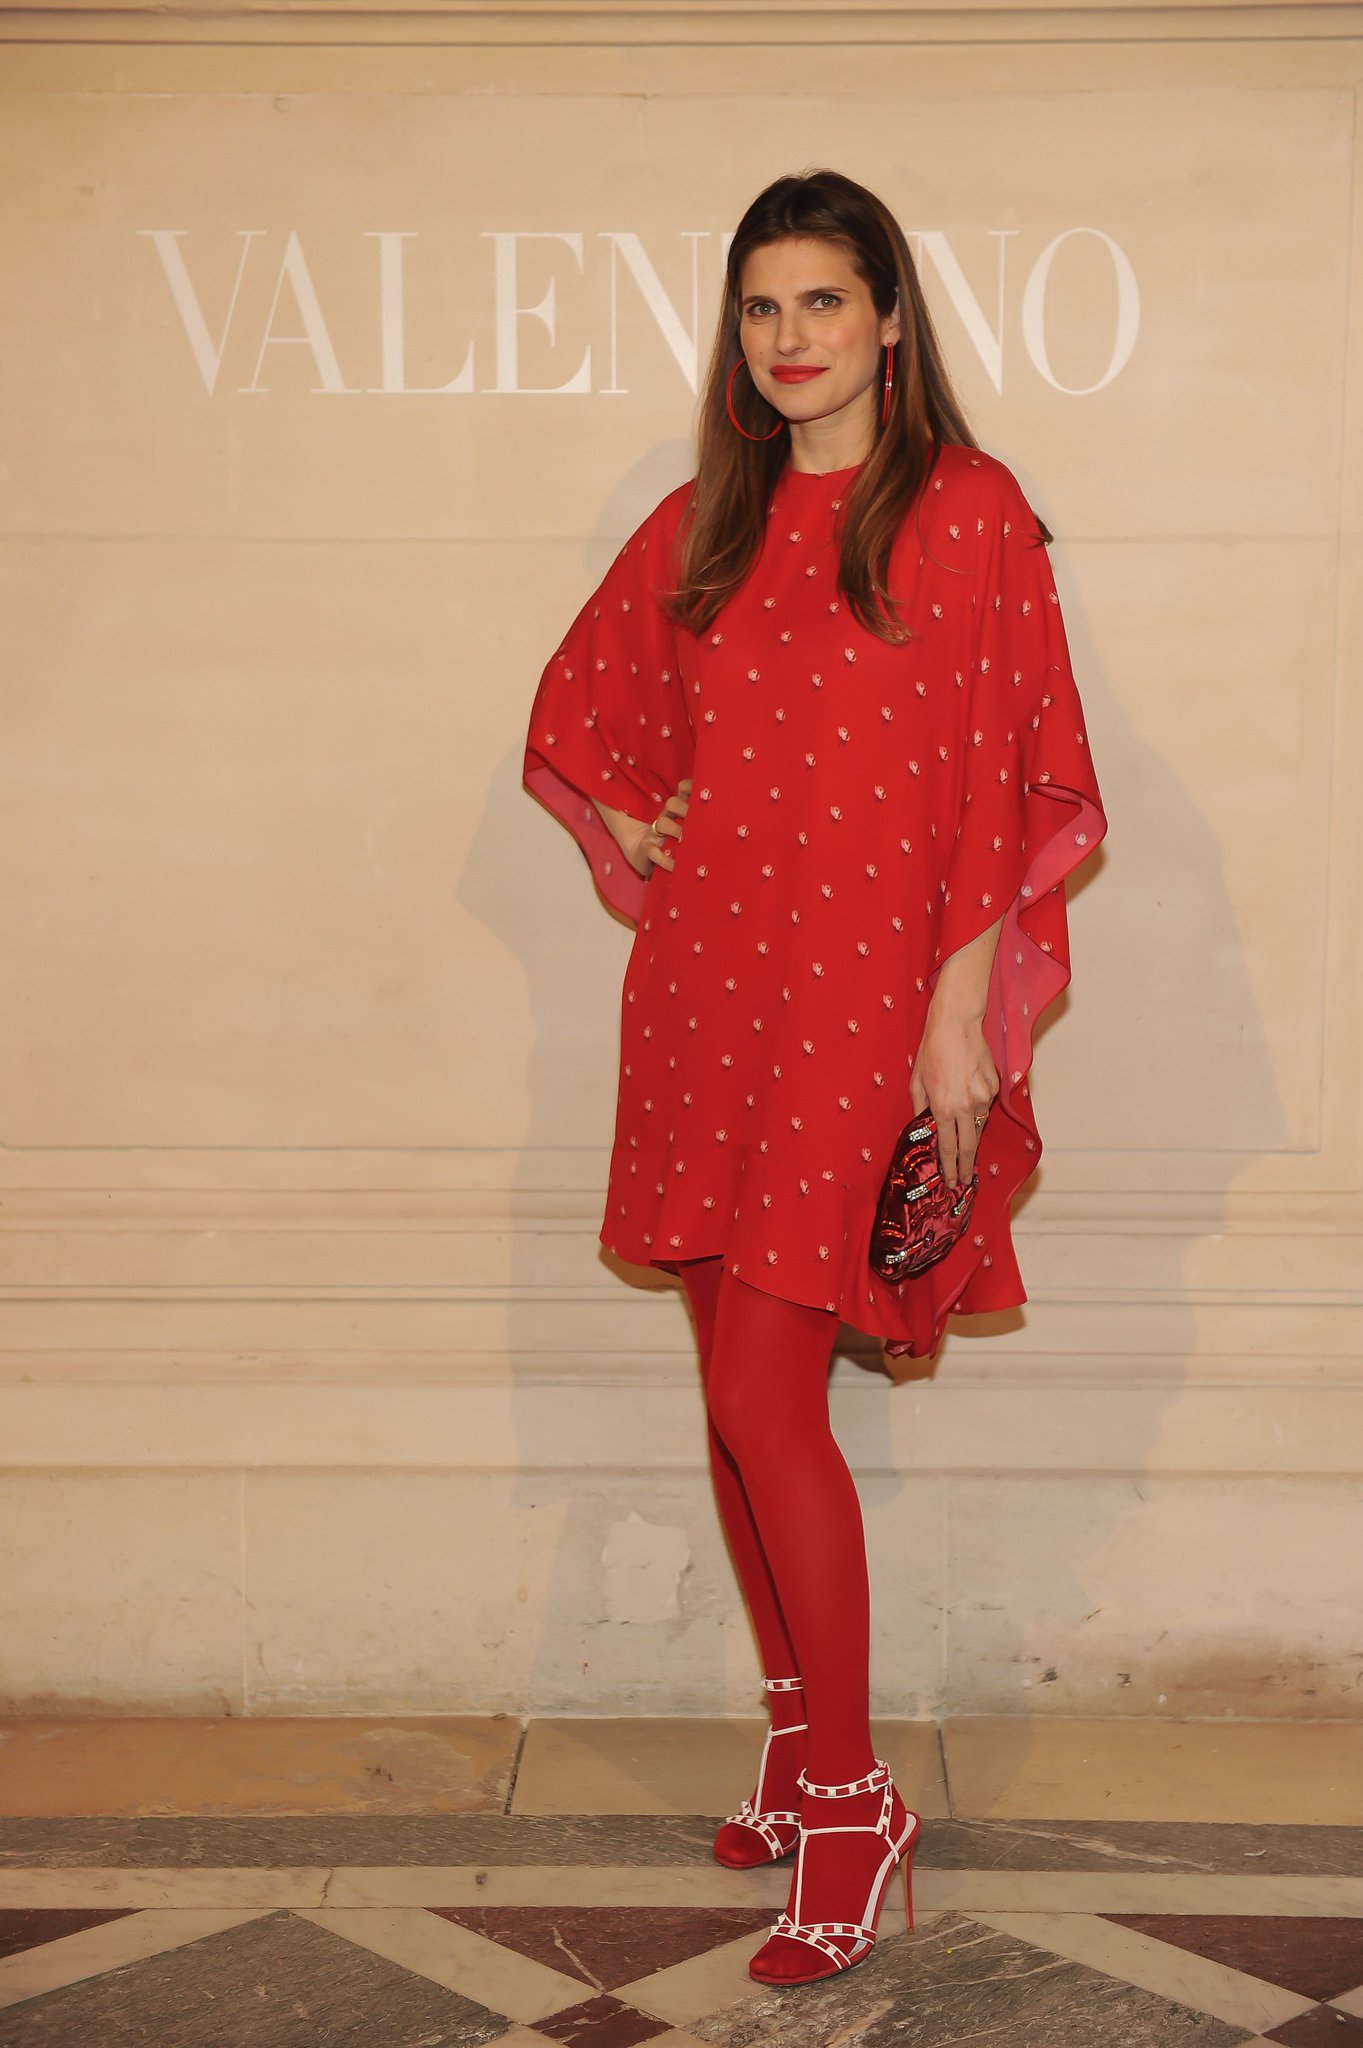 ট ইট র Maisonvalentino Jp 女優 レイクベル Lakebell が ヴァレンティノss18 コレクションのアイコニックなレッドドレスを着用し クリエイティブ ディレクター ピエールパオロピッチョーリ による ヴァレンティノオートクチュール Ss18 ショーに出席